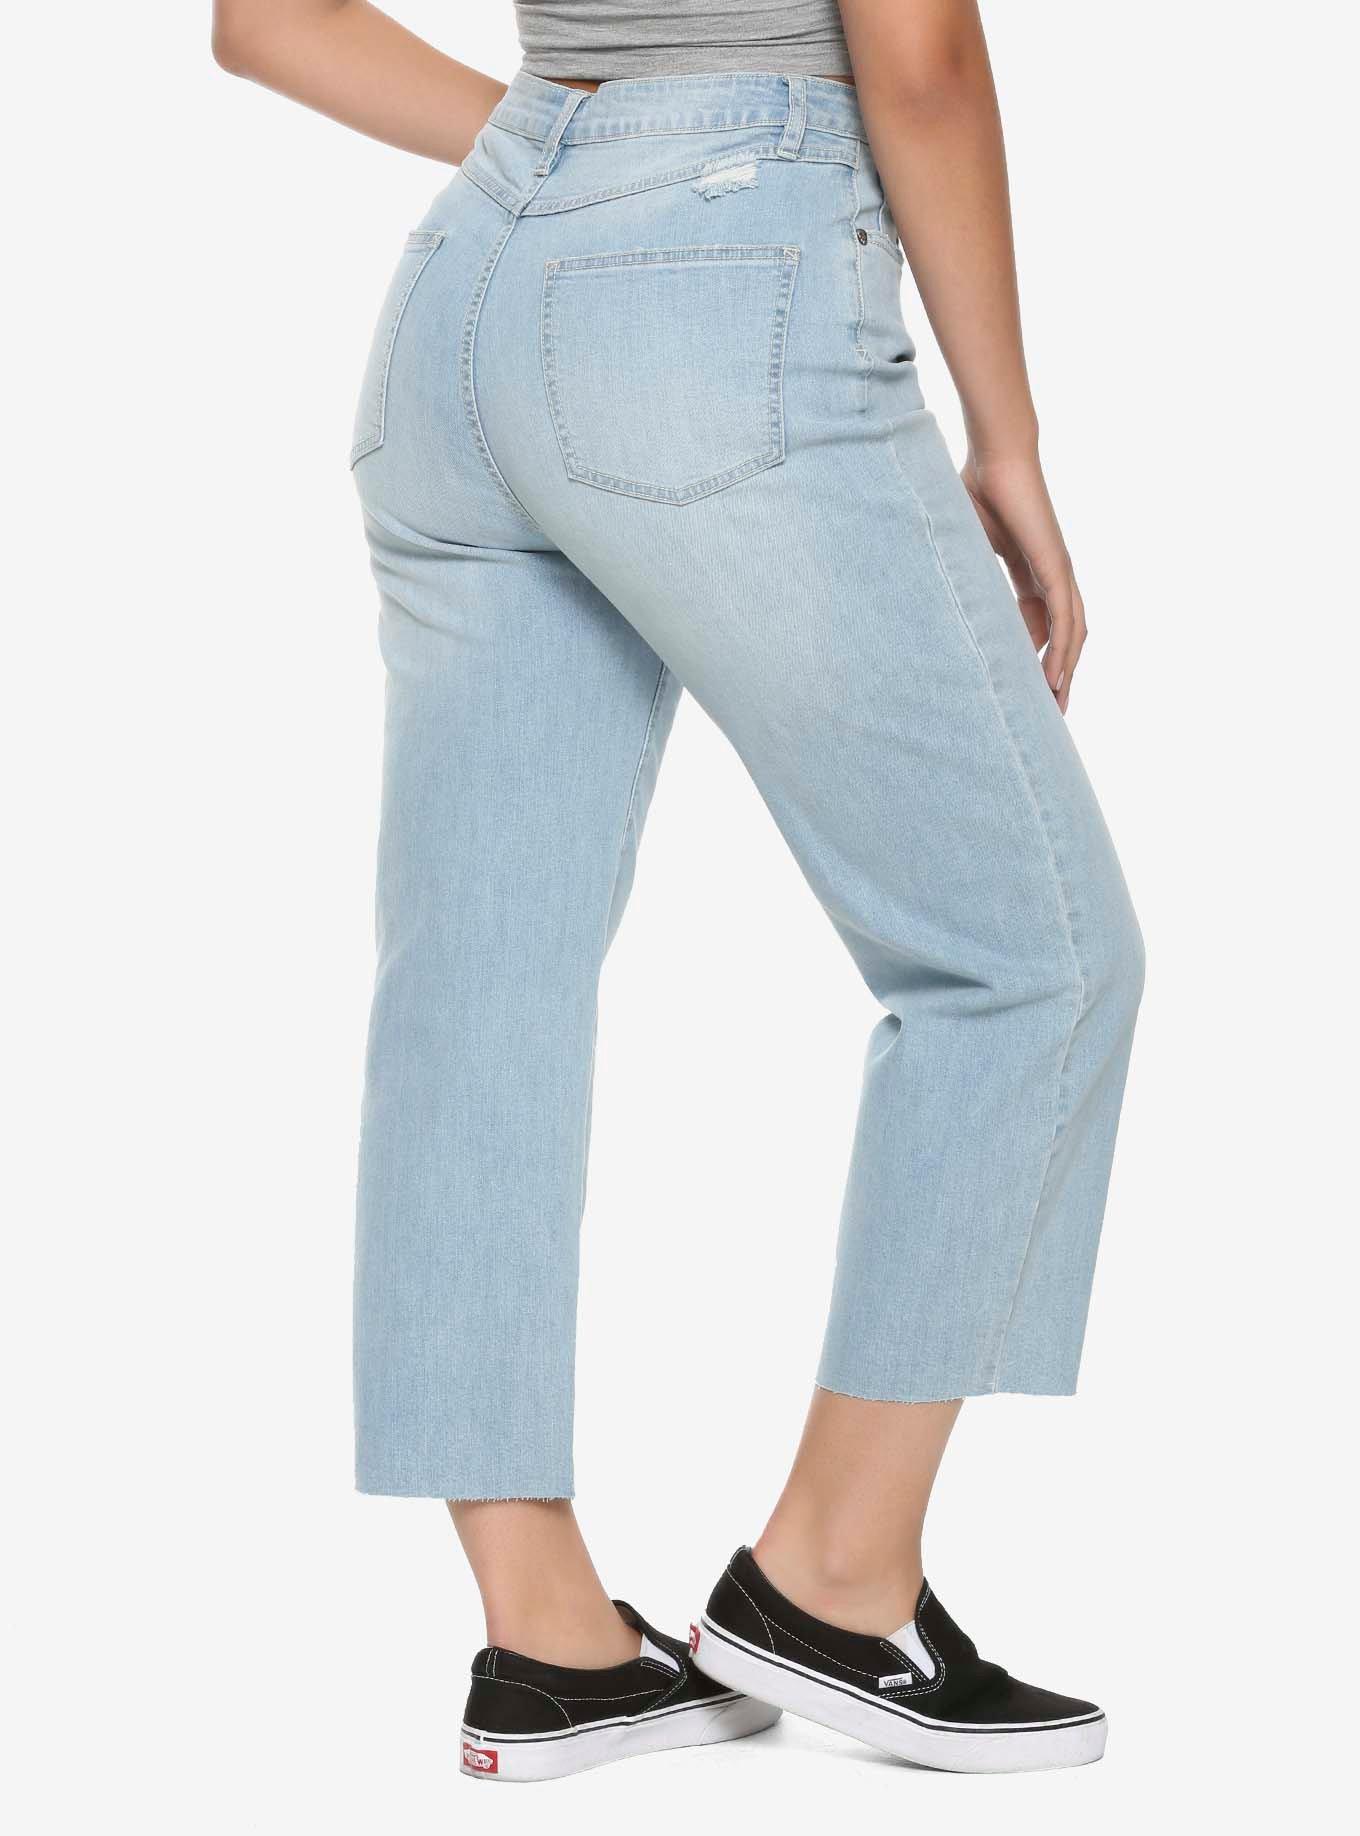 HT Denim Indigo Ultra Hi-Rise Crop Flared Jeans, INDIGO, alternate